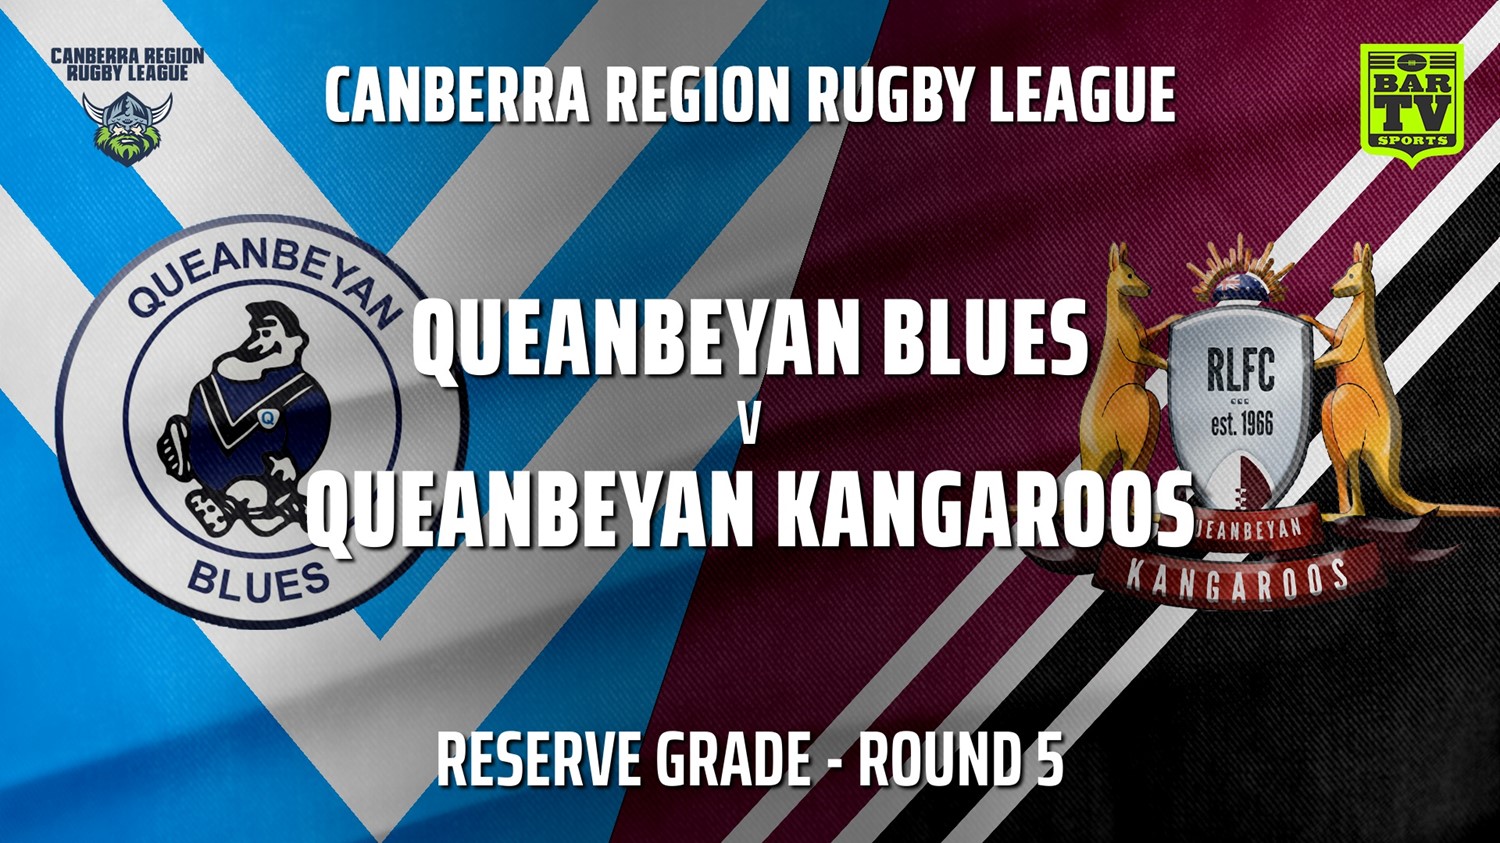 210508-CRRL Round 5 - Reserve Grade - Queanbeyan Blues v Queanbeyan Kangaroos Slate Image